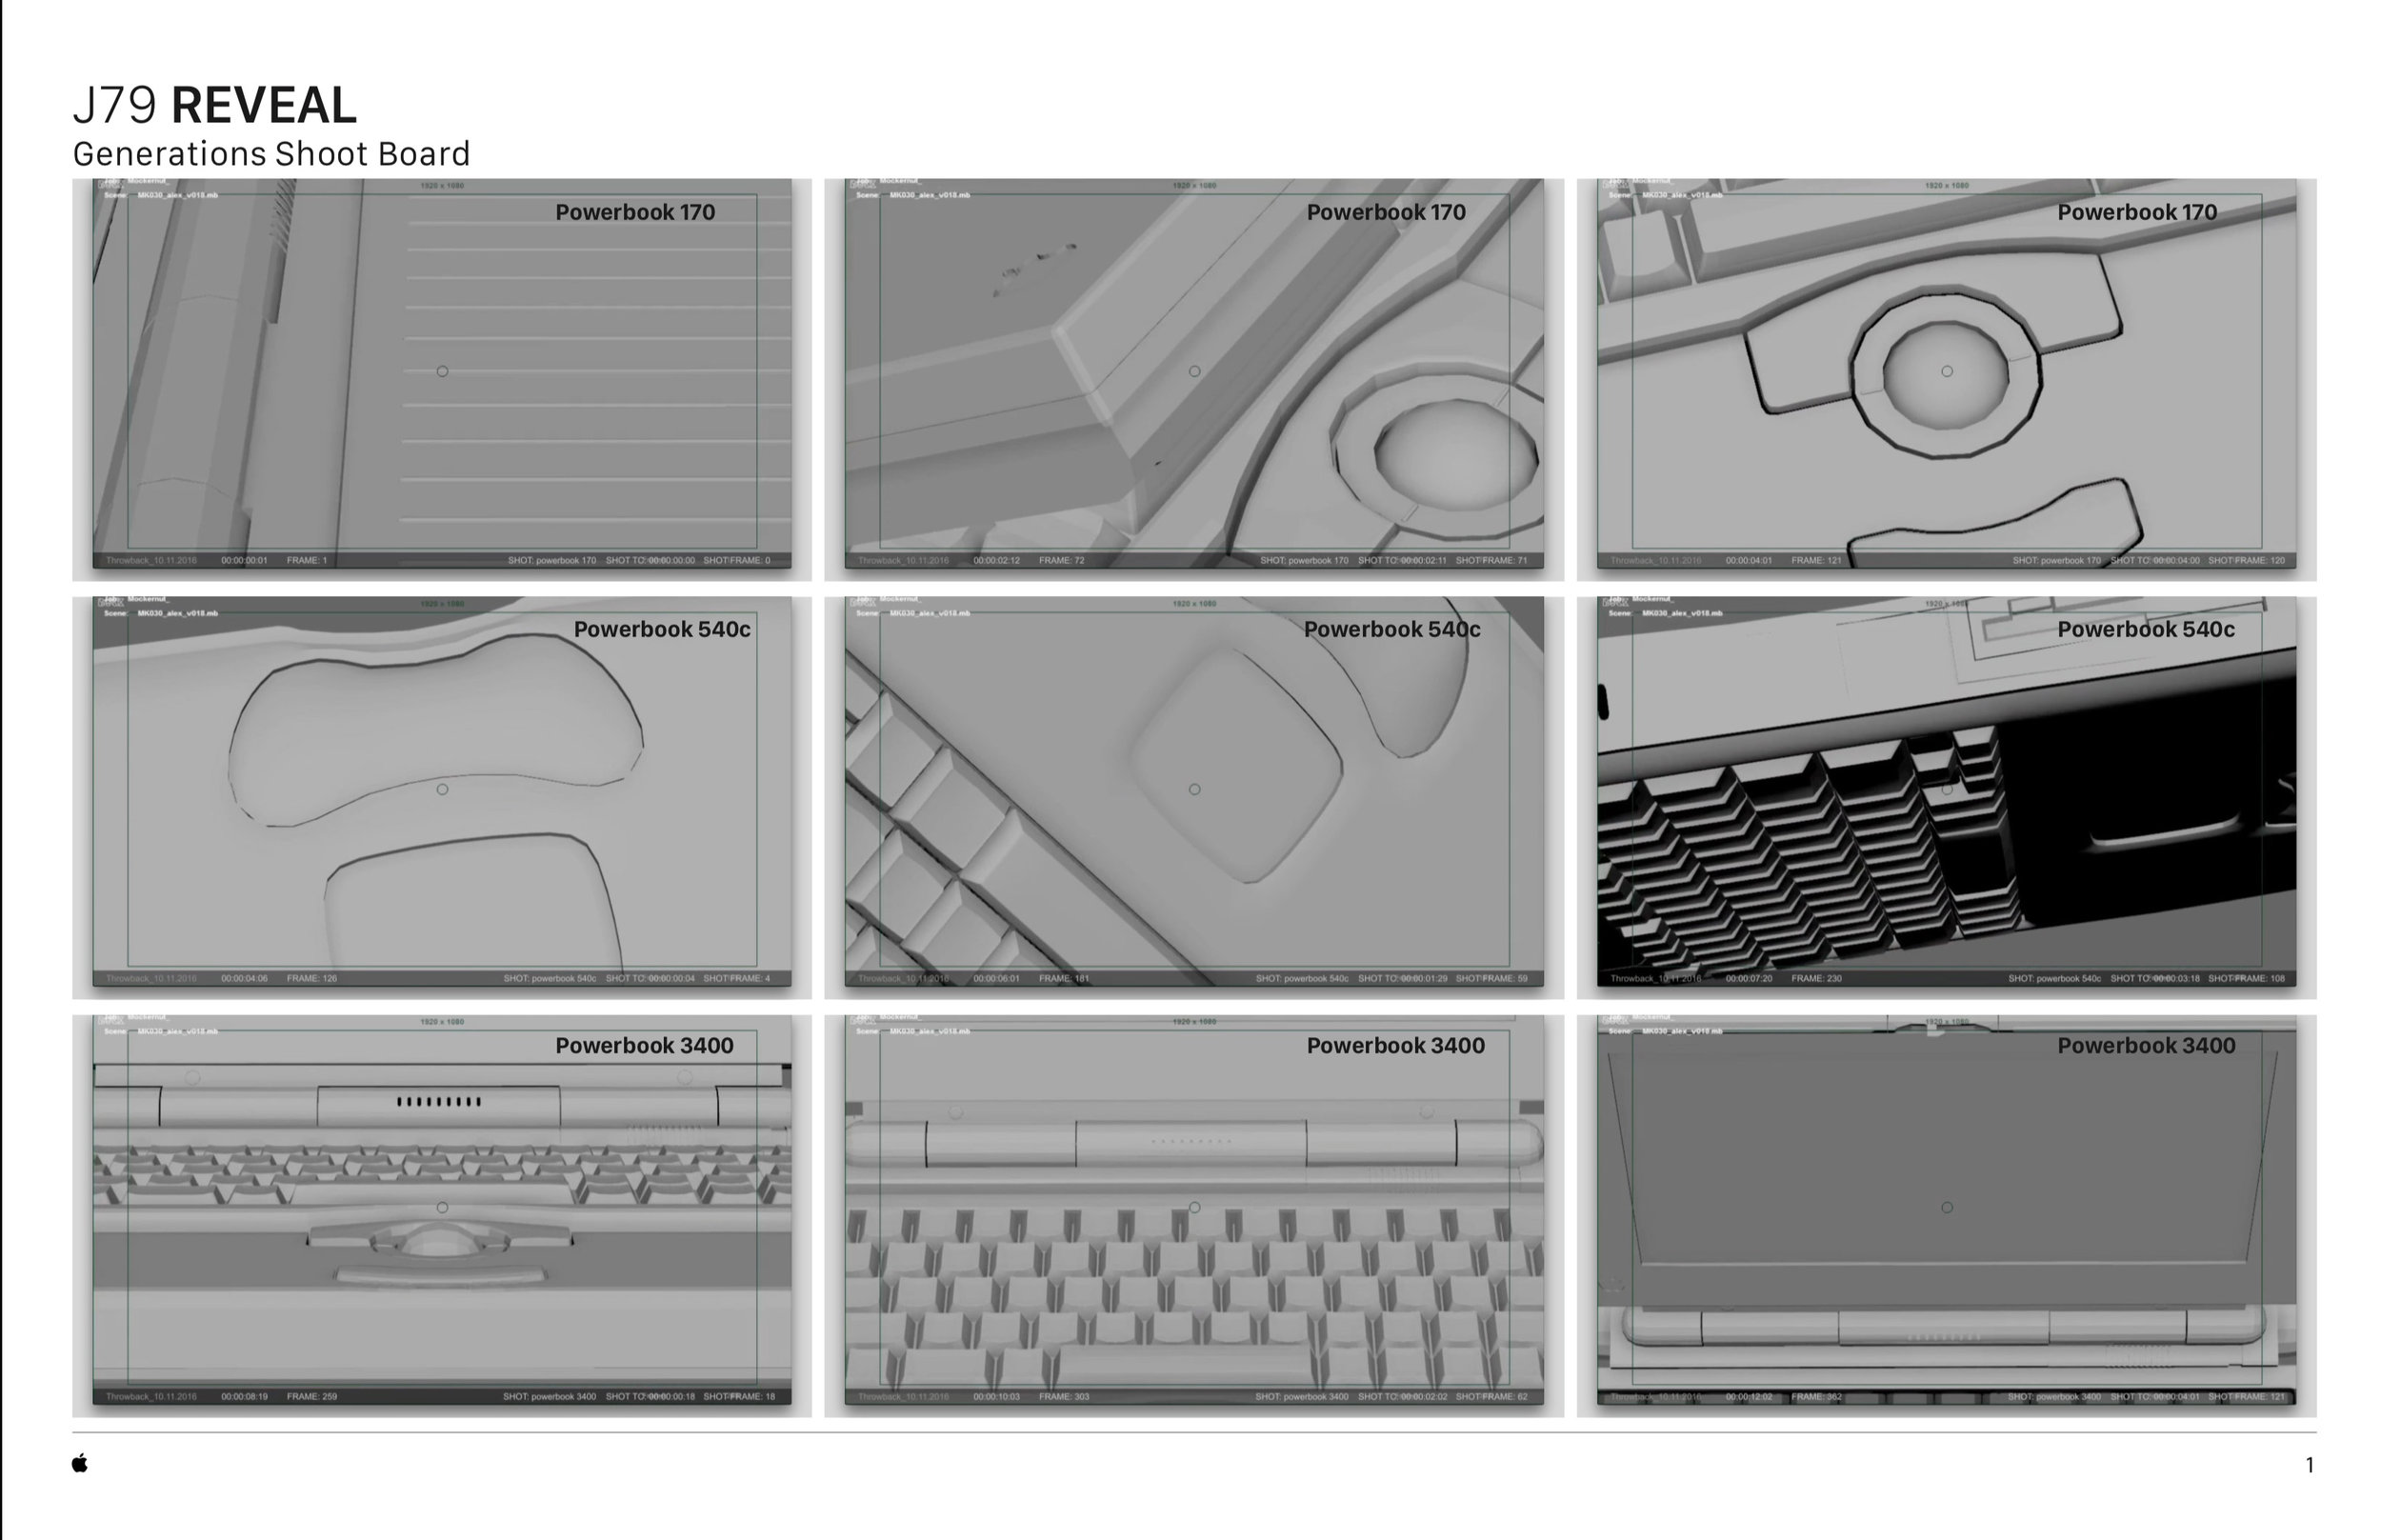 Macbook-Reveal-generations-v3.001.jpg